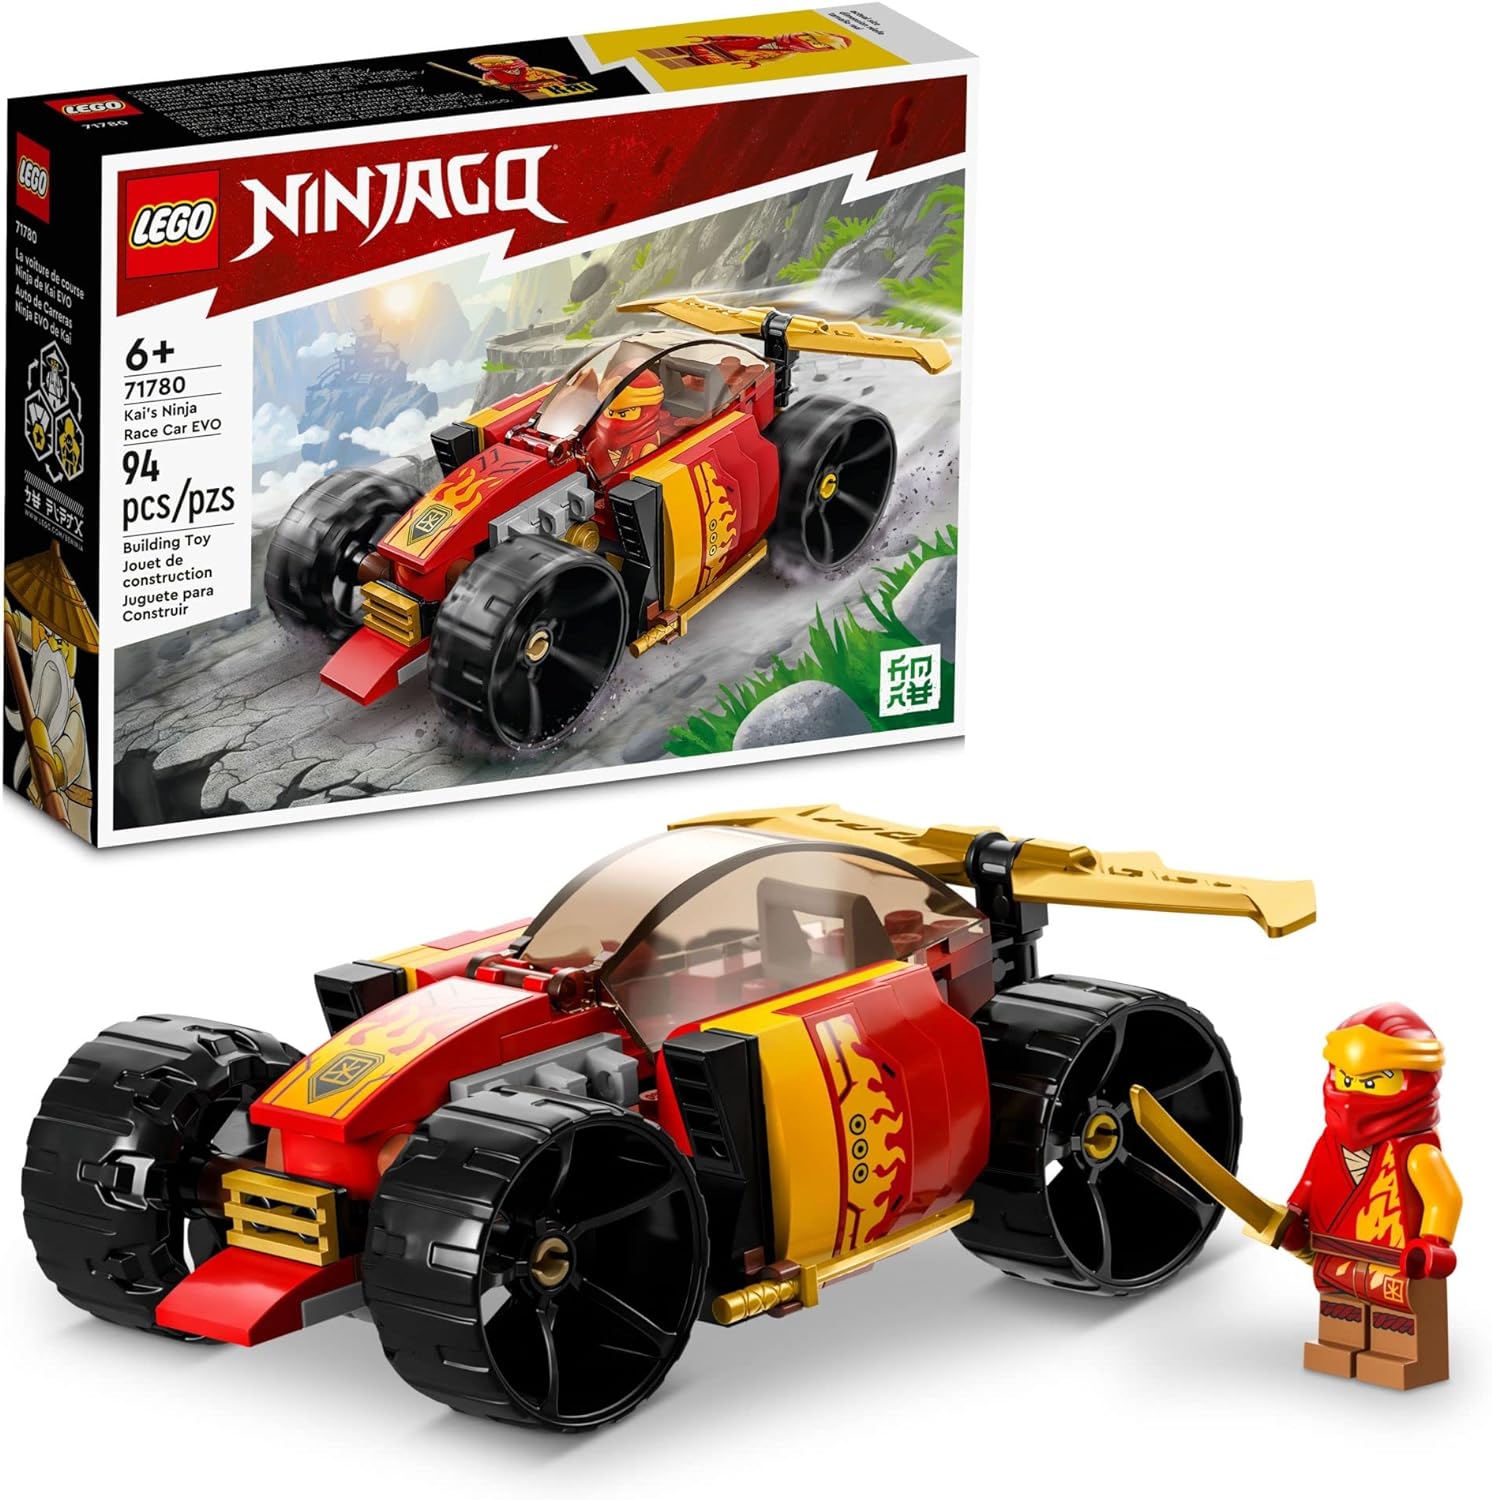 Lego NINJAGO Kai's Ninja Race Car EVO 71780, 20in1 Racing Car Building Toy Set, Kids Can Build a Off